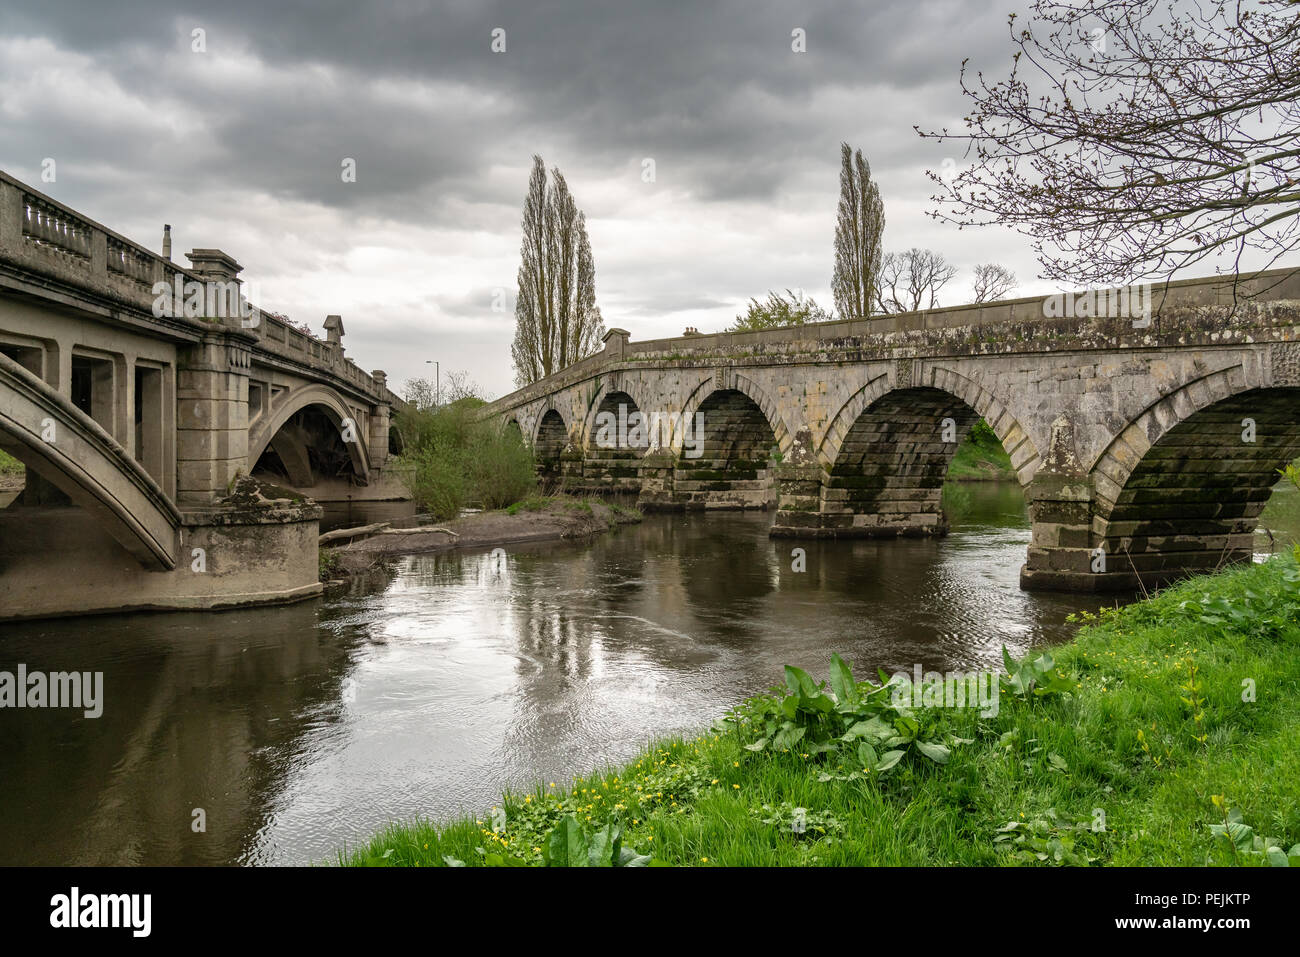 The old bridge and Atcham Bridge over the River Severn in Atcham, near Shrewsbury, Shropshire, England, UK Stock Photo